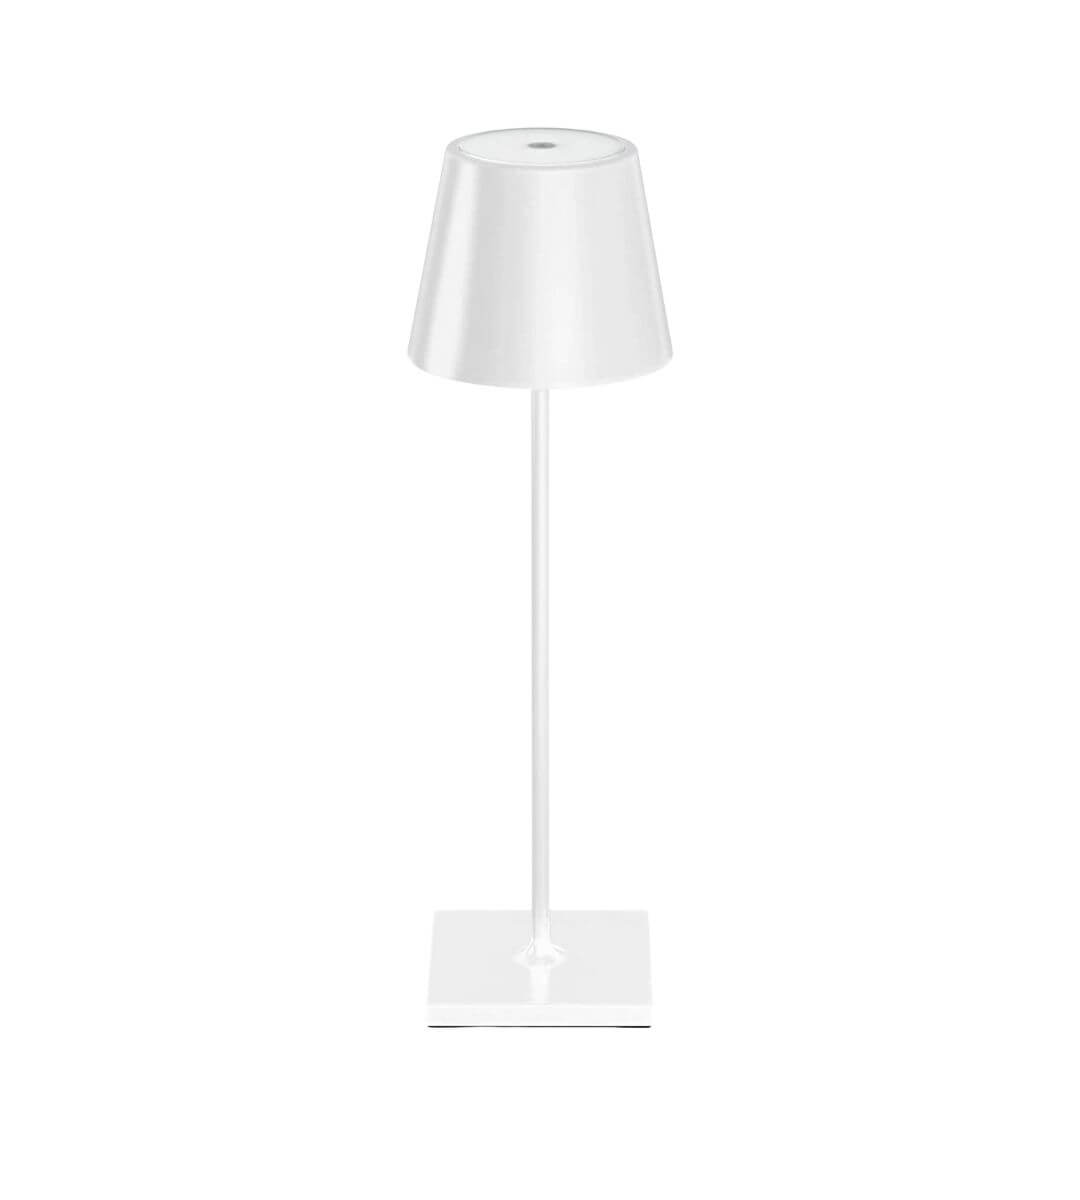 Smart Mood Lamp, lampe de table sans fil avec LED Rgb programmable